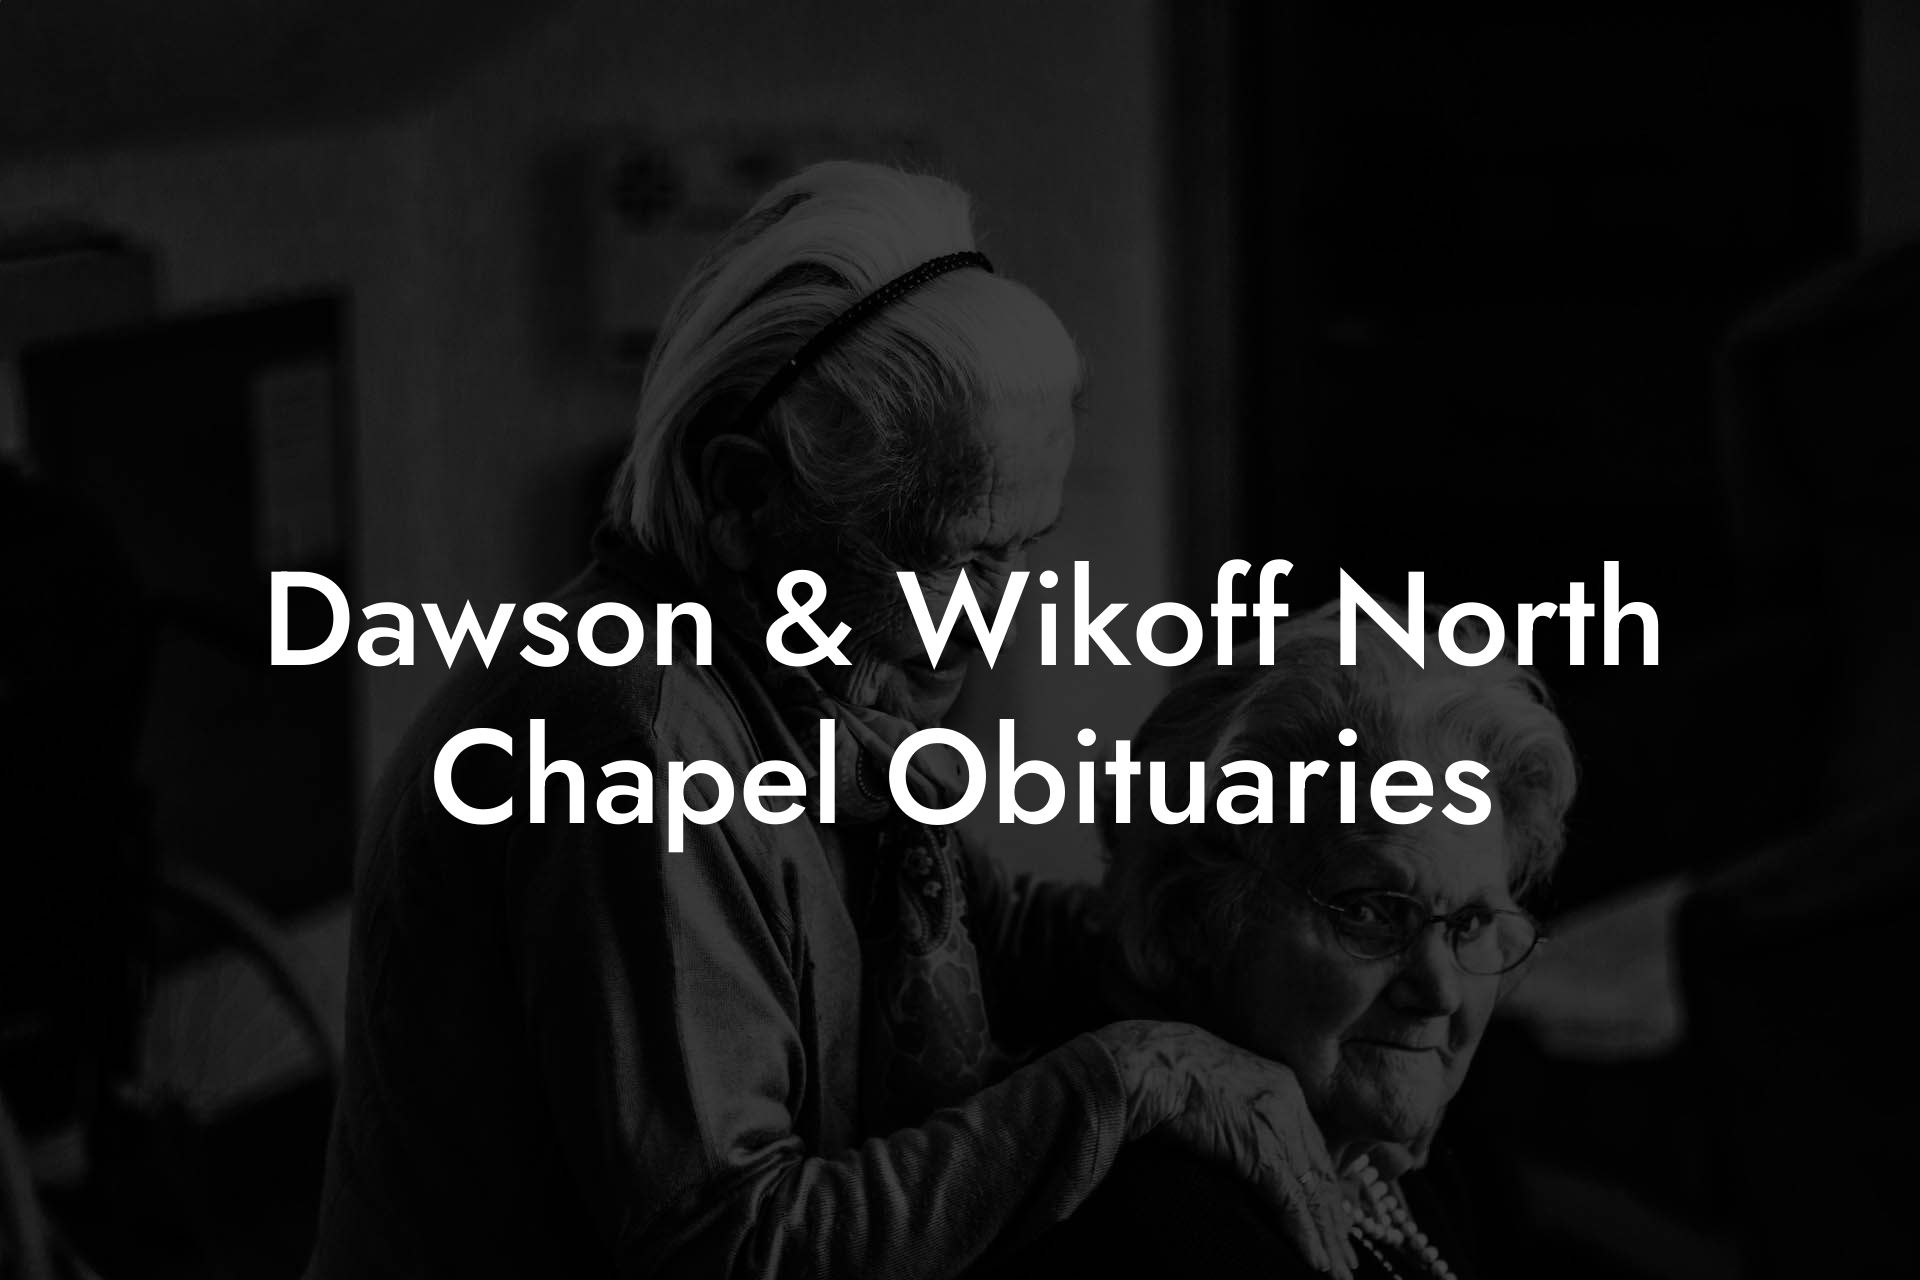 Dawson & Wikoff North Chapel Obituaries